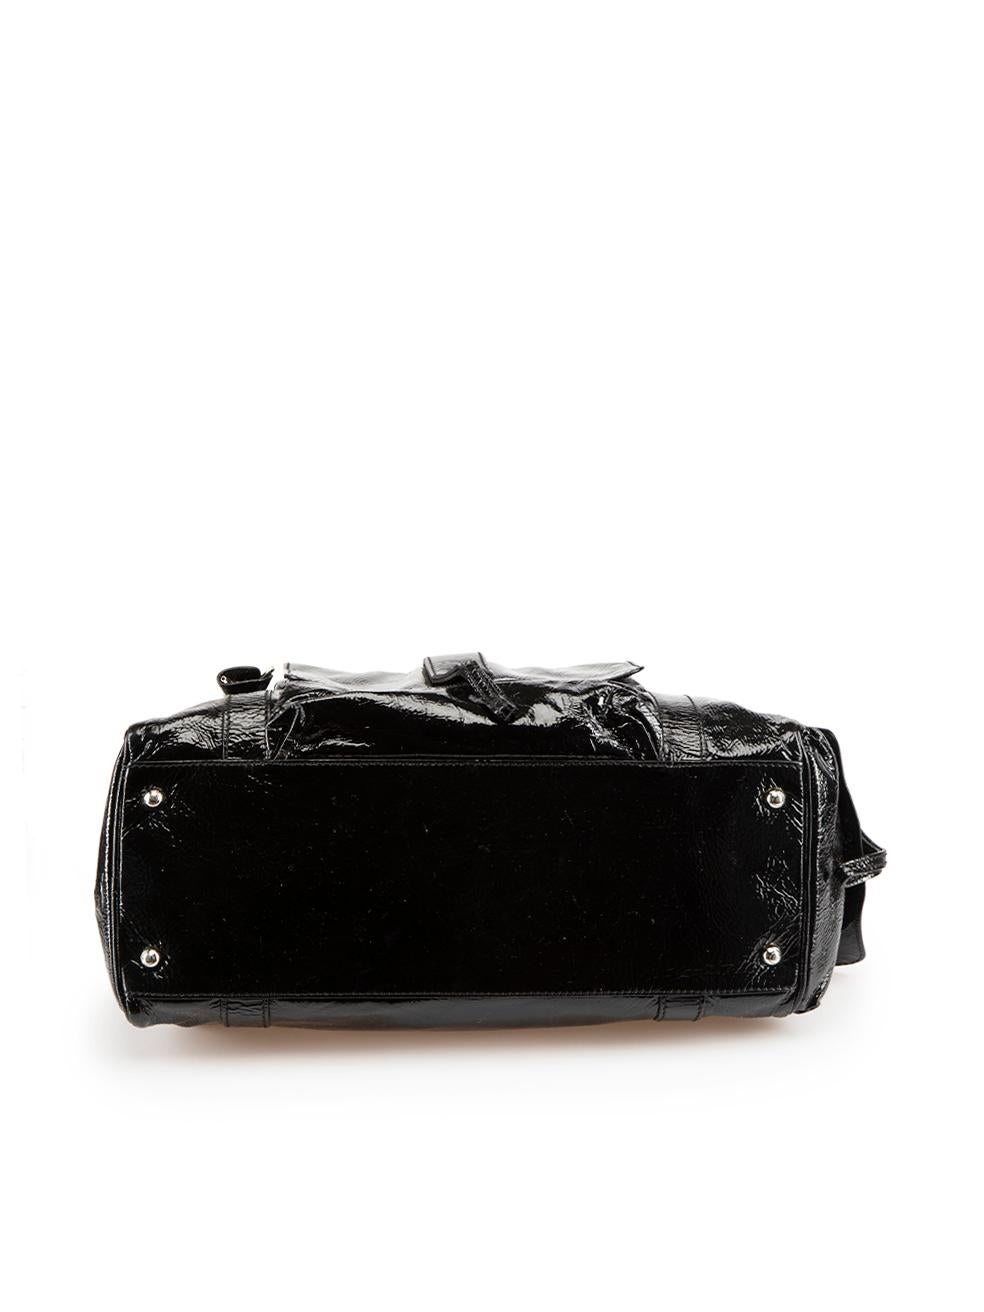 Women's Tod's Black Patent Leather Medium Shoulder Bag